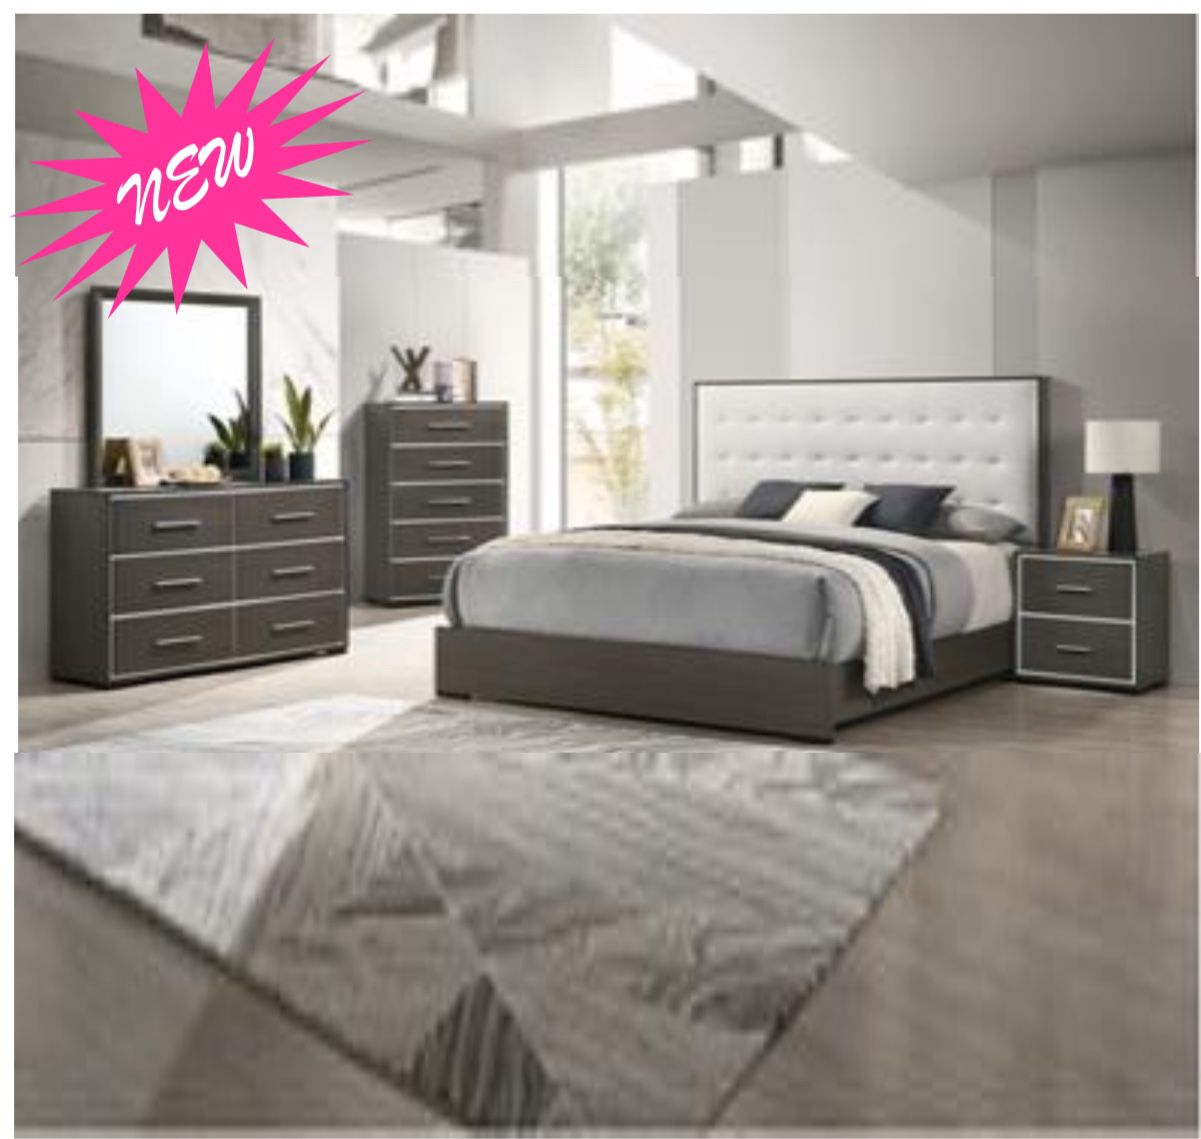 4-Pc Bedroom Set Queen Bed ,Dresser,Mirror, Nightstand #1 (Not Including mattress and box)